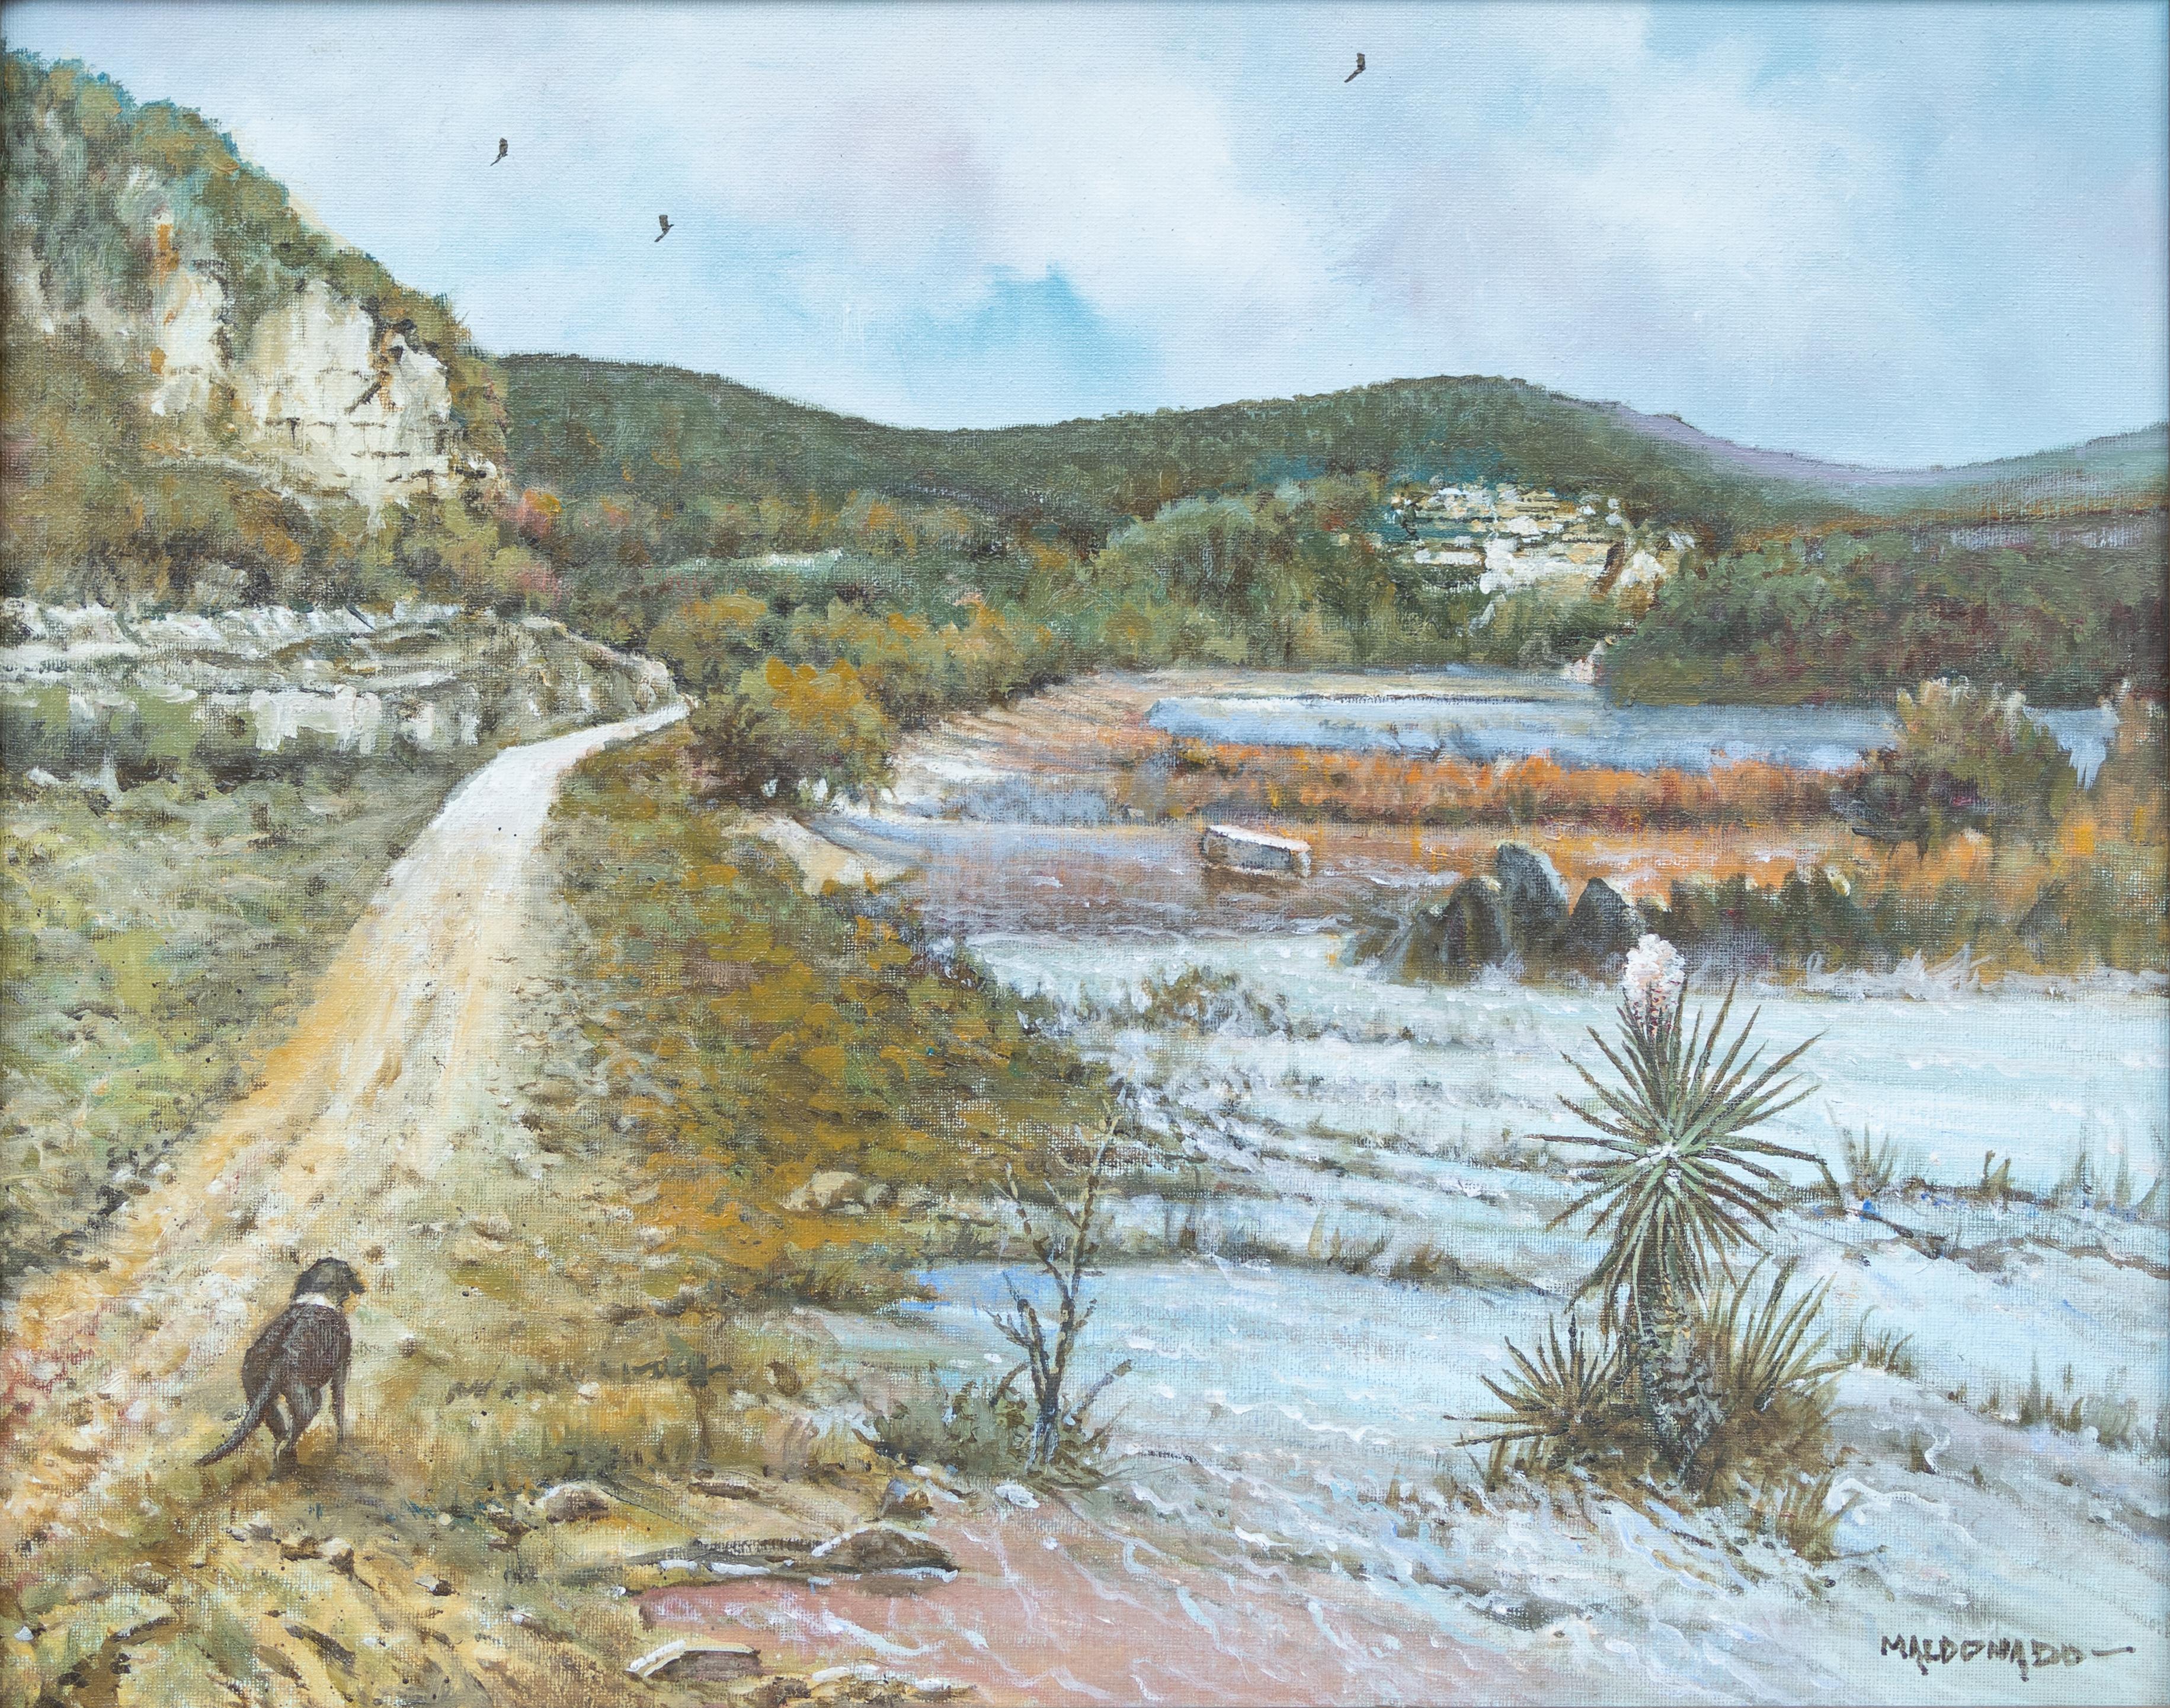 Daniel Maldonado Landscape Painting - "Garner State Park" Texas hill country landscape